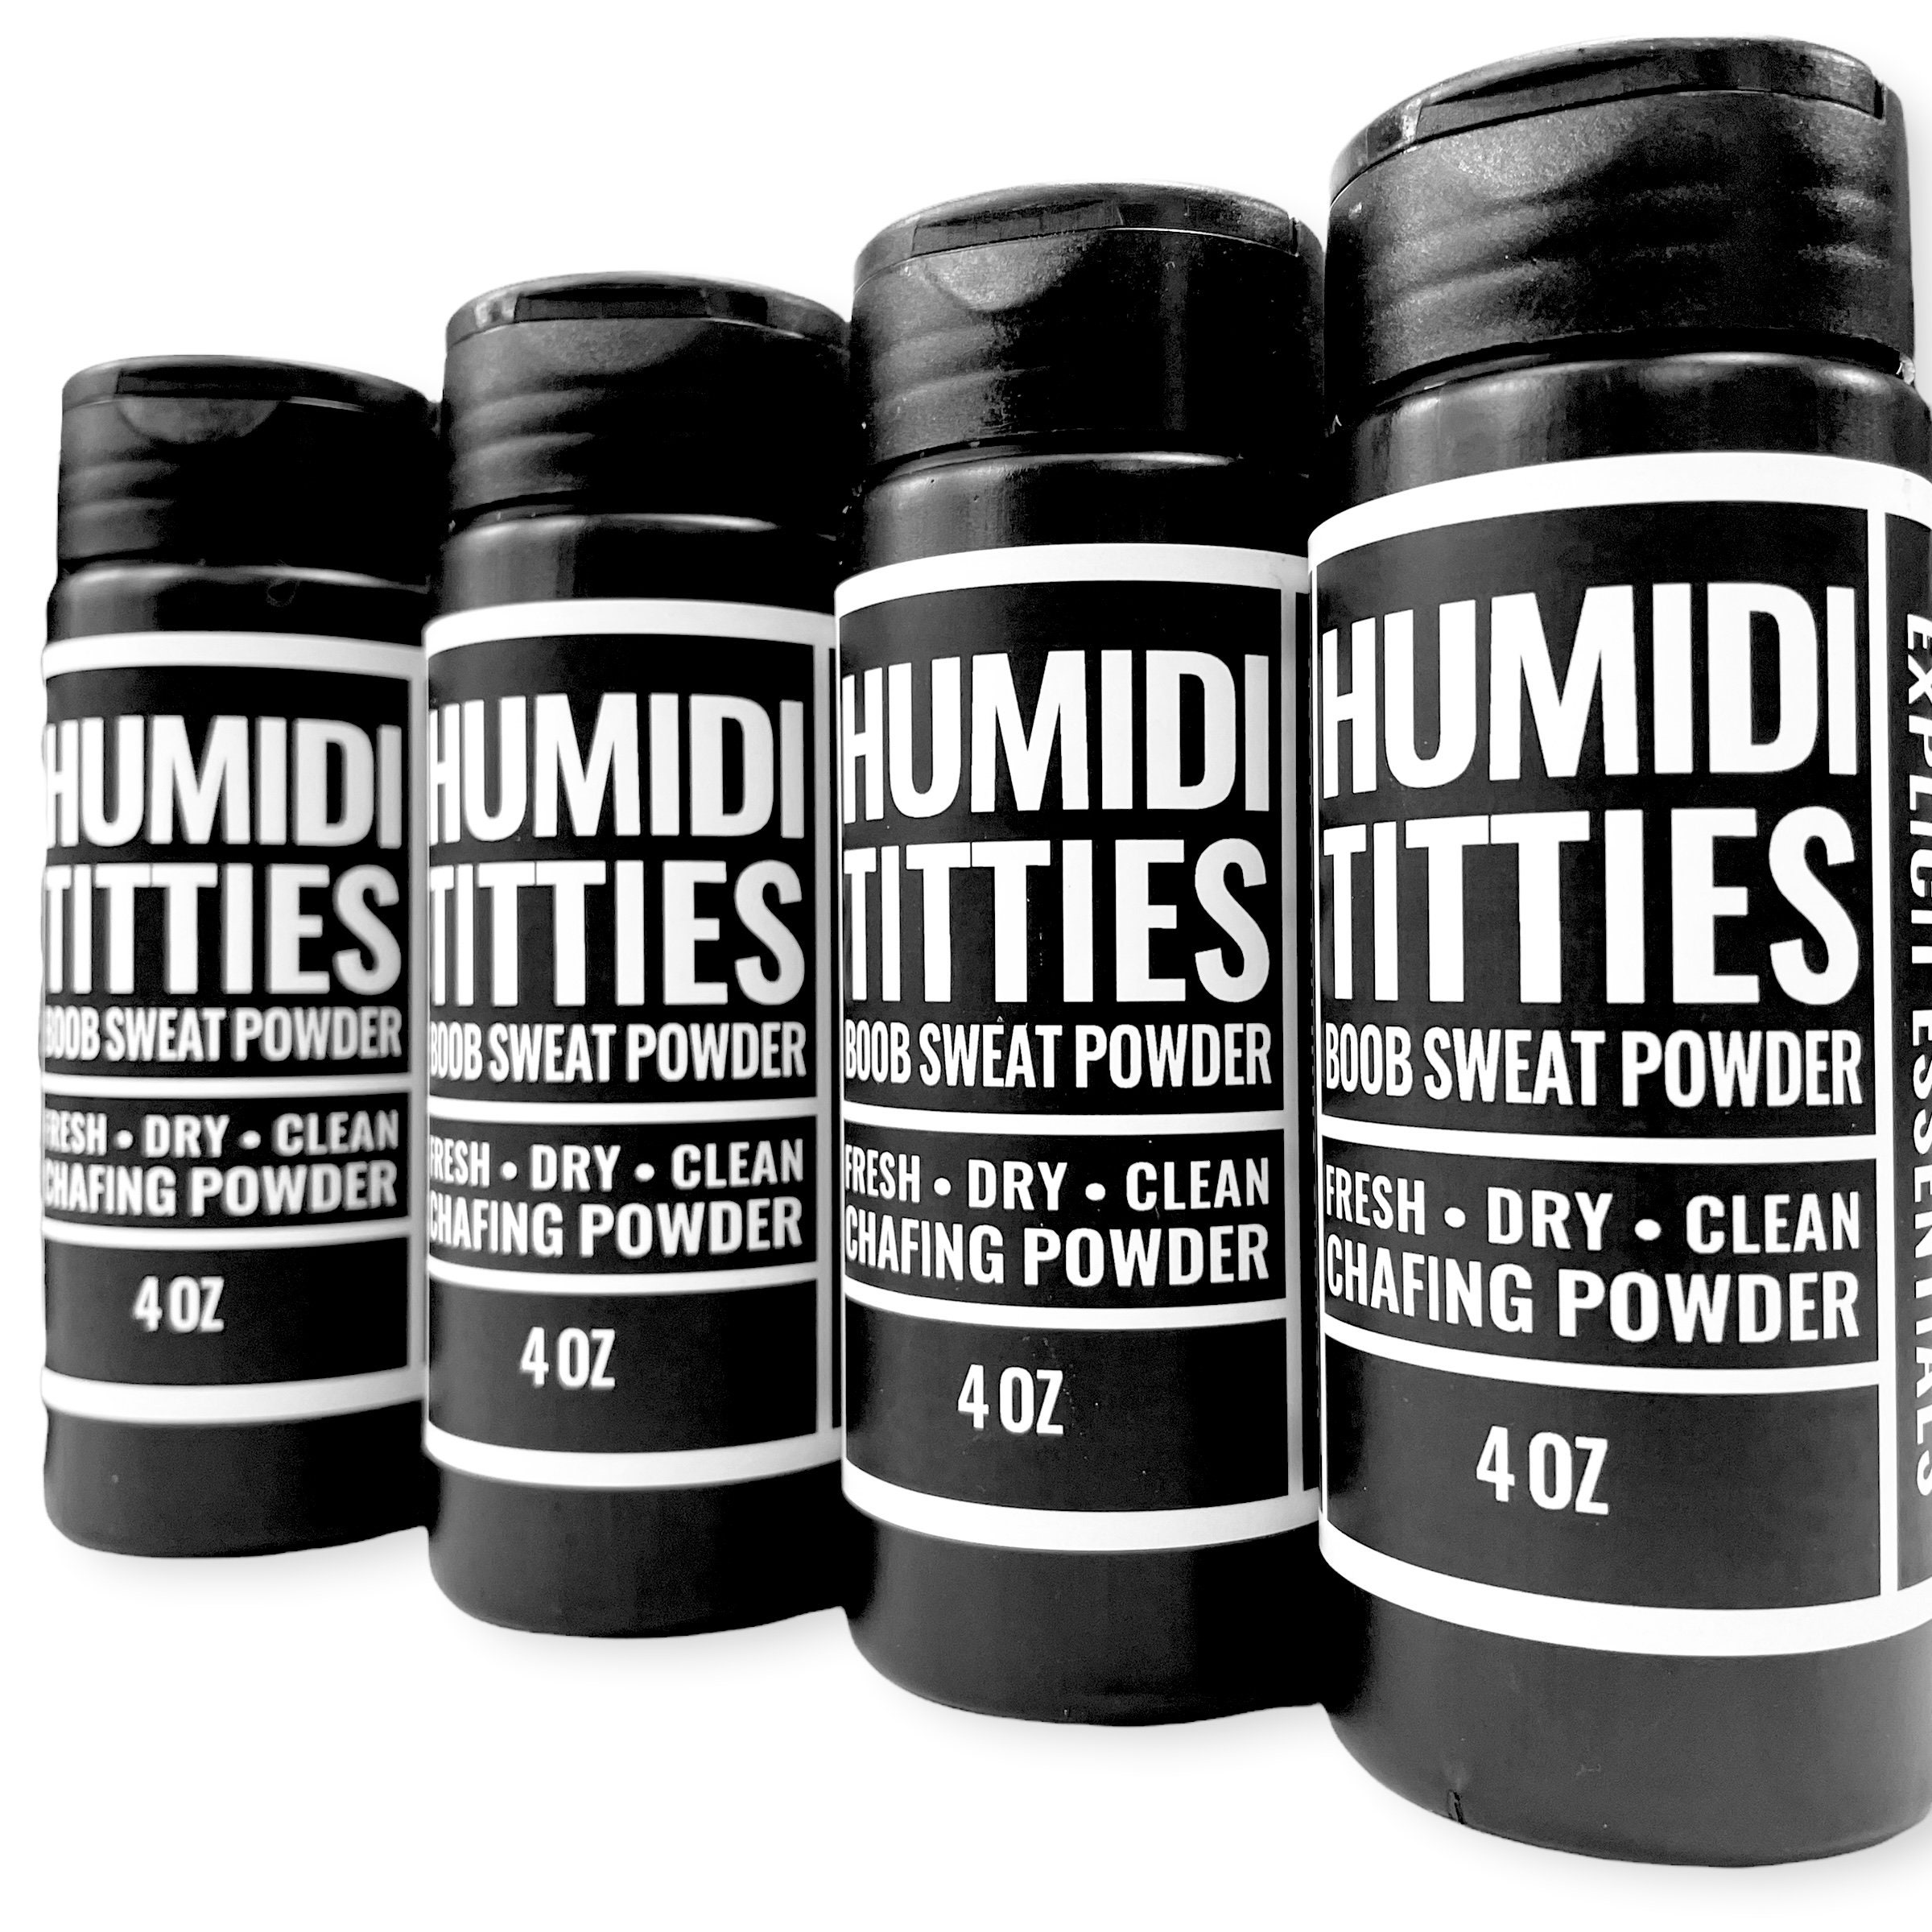 Humidititties, Boob Sweat Powder, Powder Deodorant, Underboob